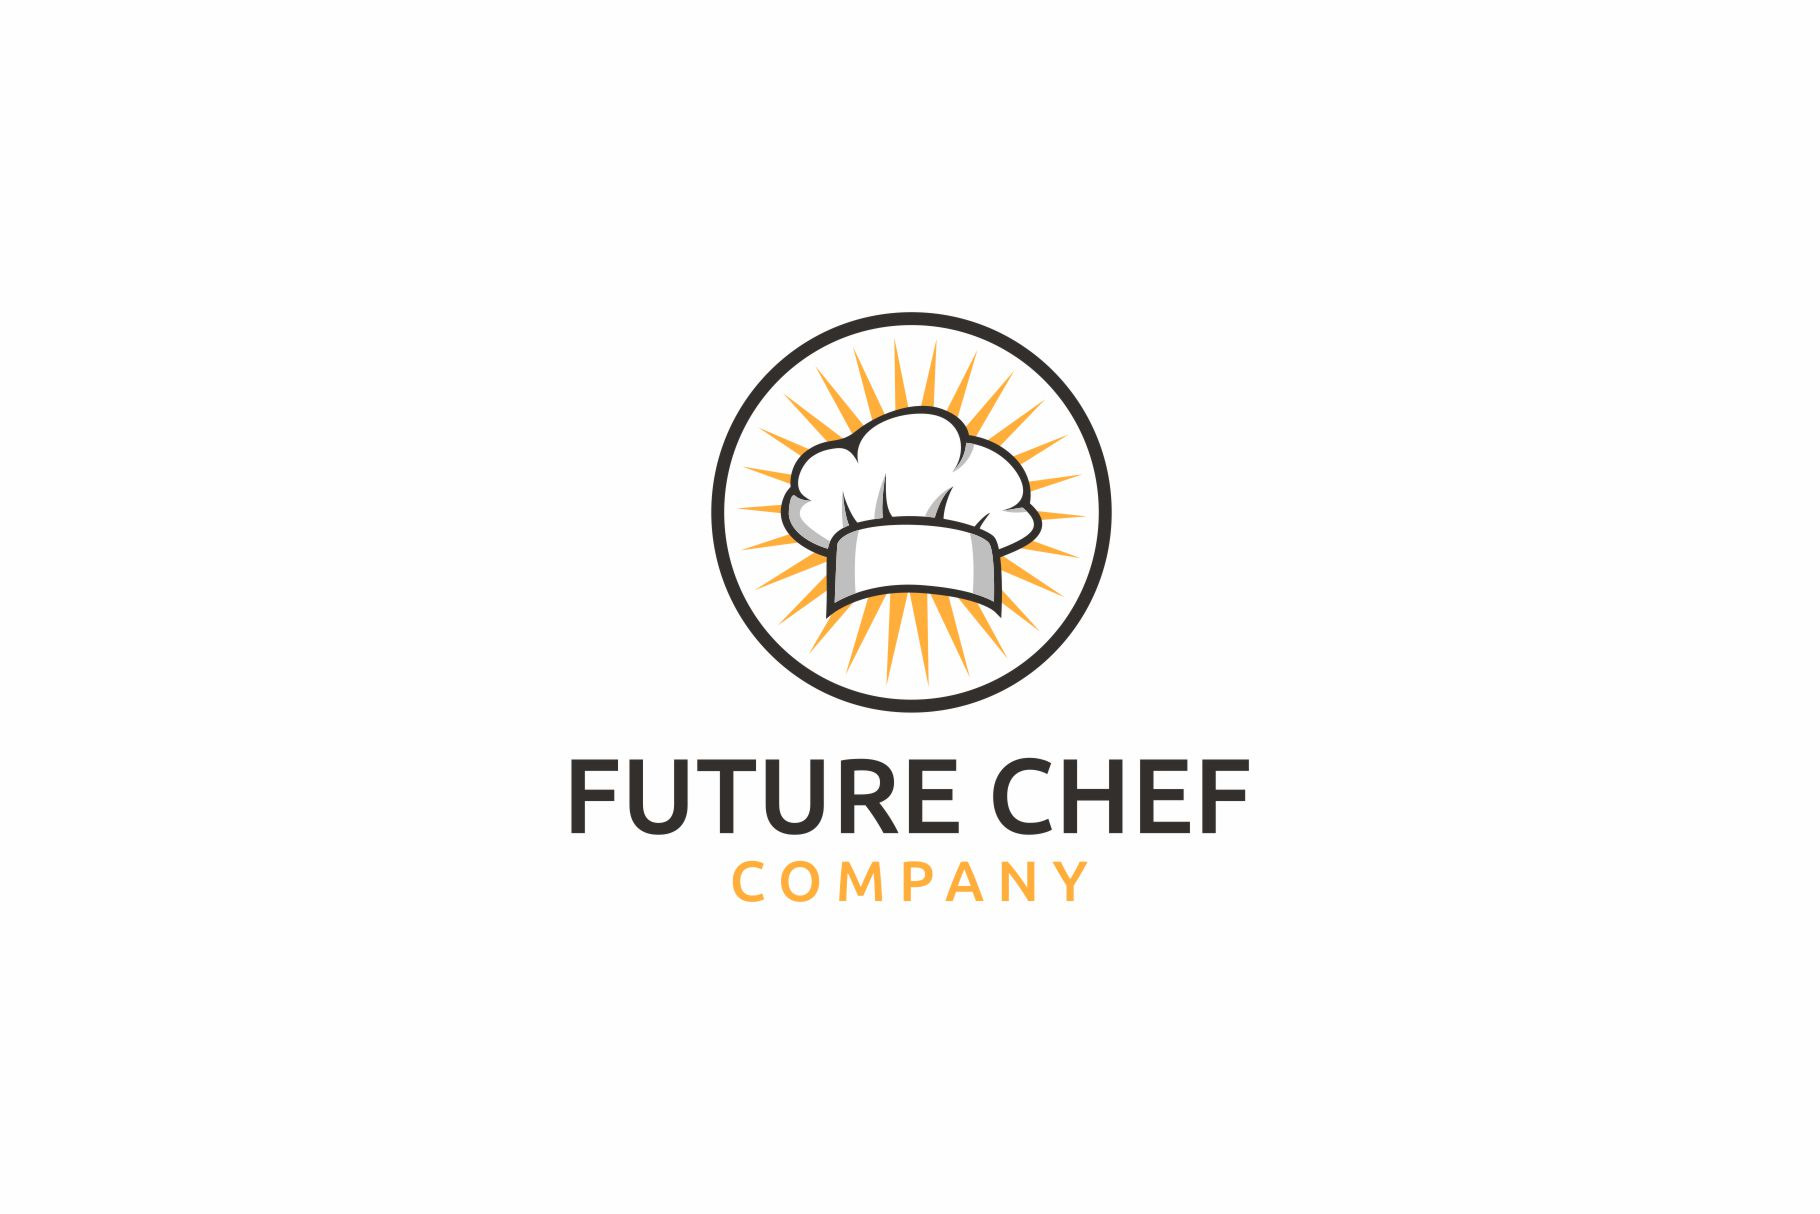 Chef Hat Logo Design